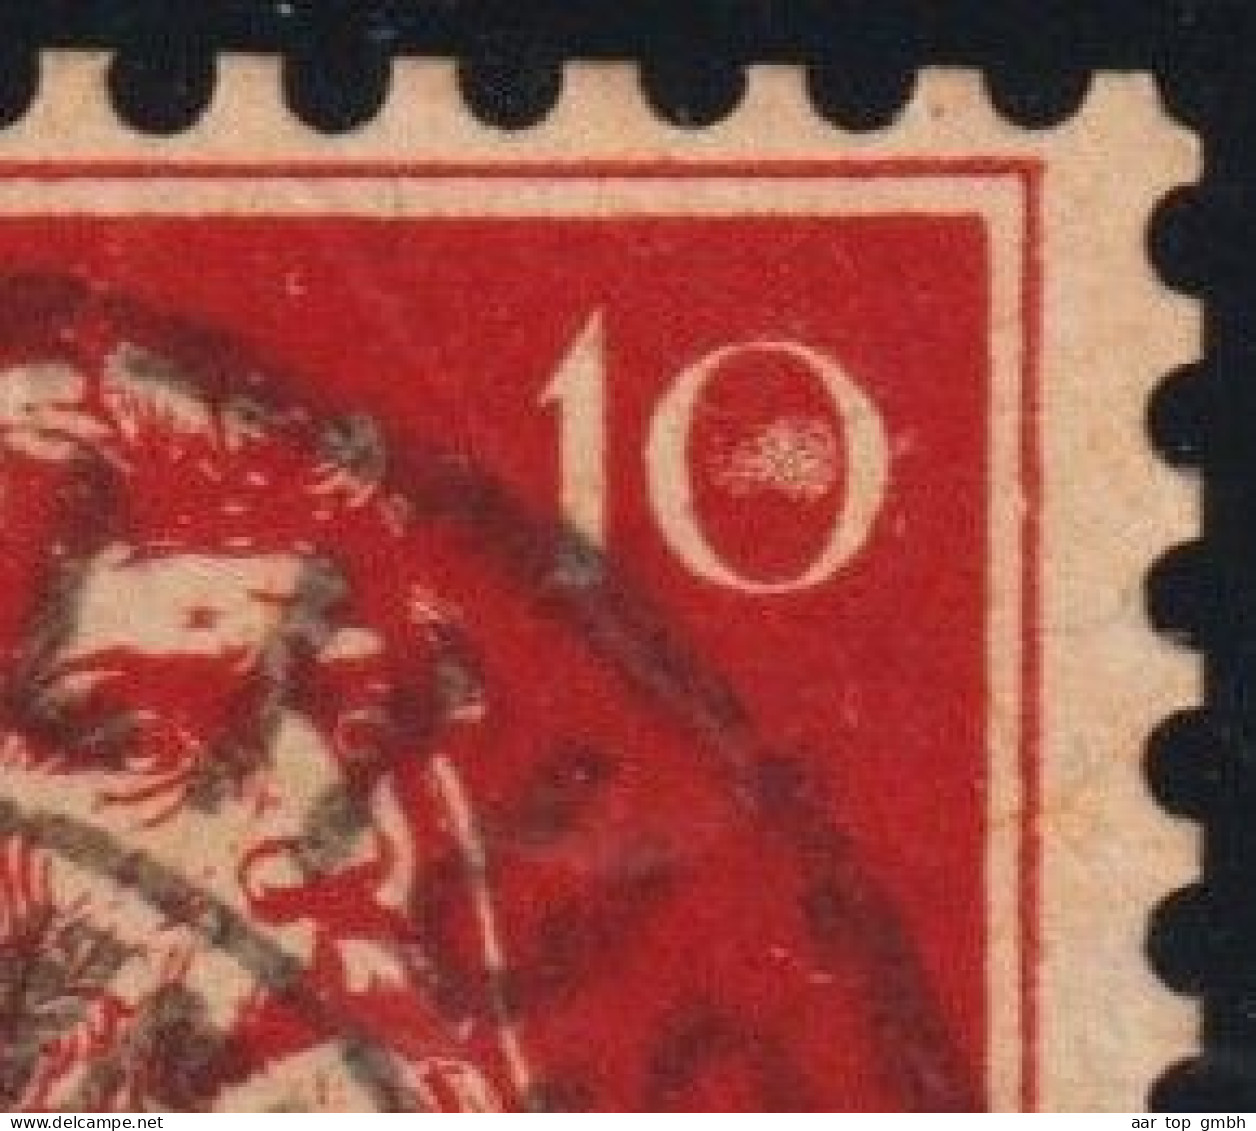 Schweiz Tellbrust SBK#126II Abart Heller Fleck In O Von 10 Gestempelt - Used Stamps